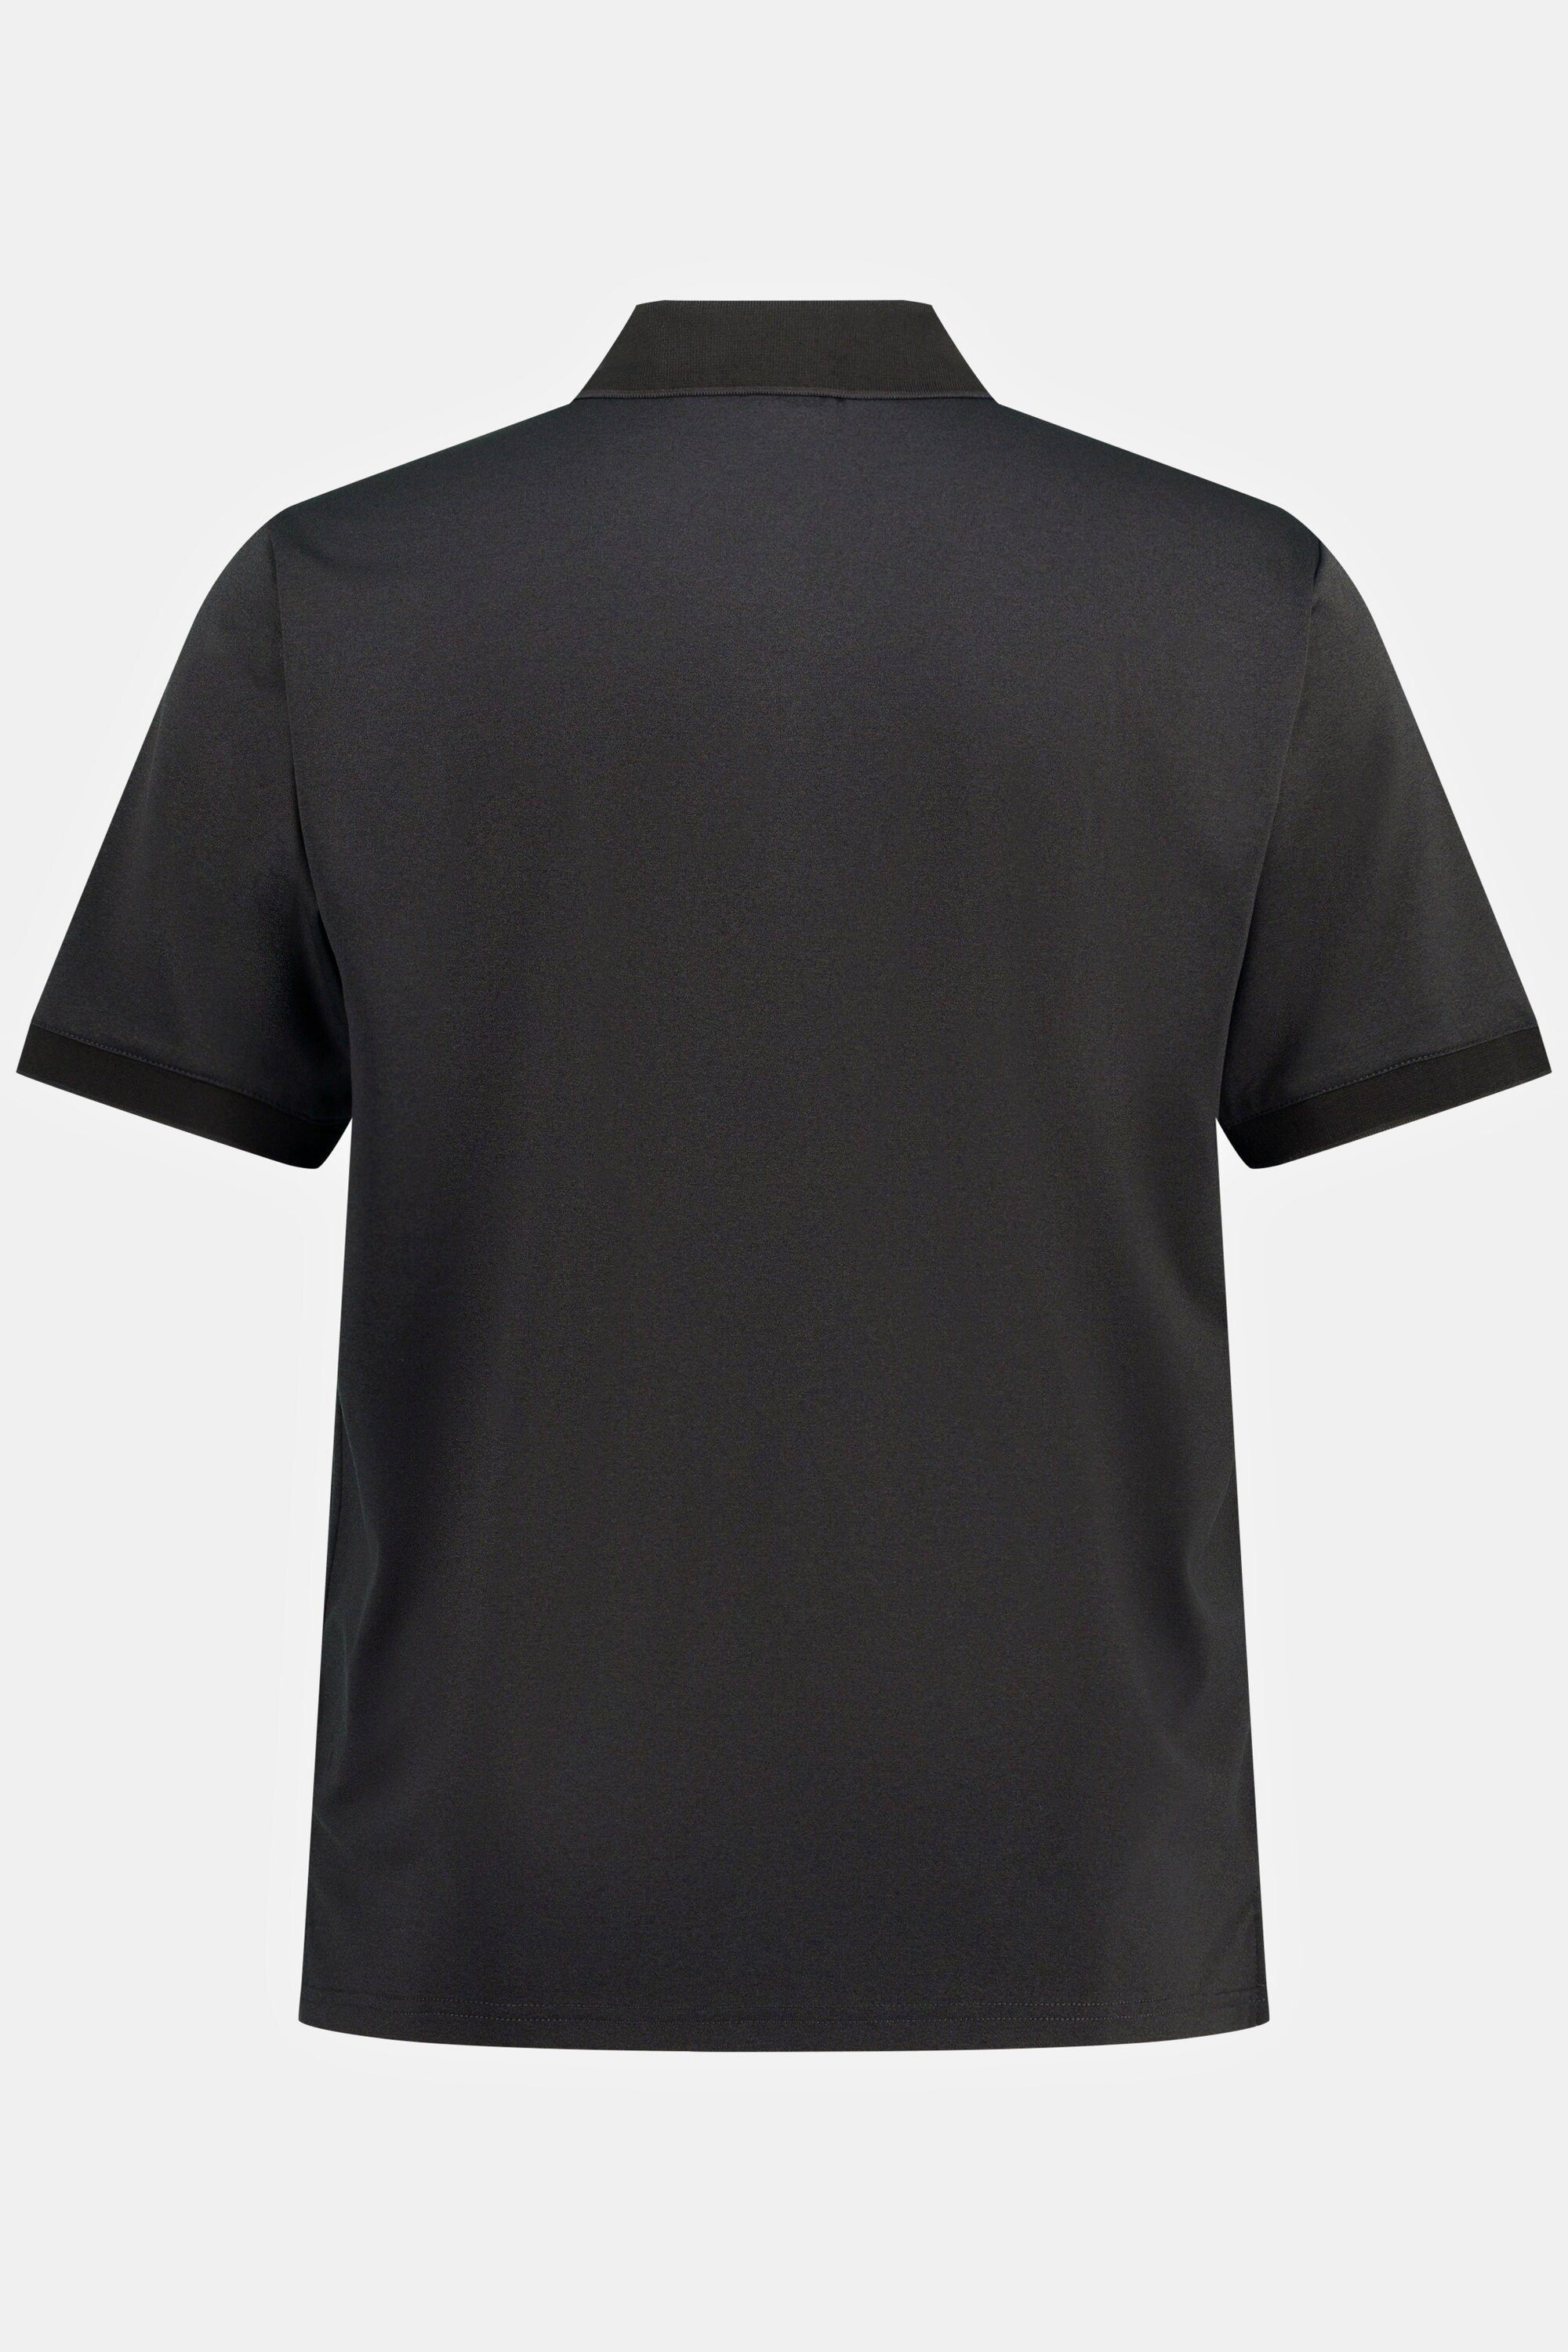 Poloshirt QuickDry schwarz Halbarm Golf JP1880 Poloshirt